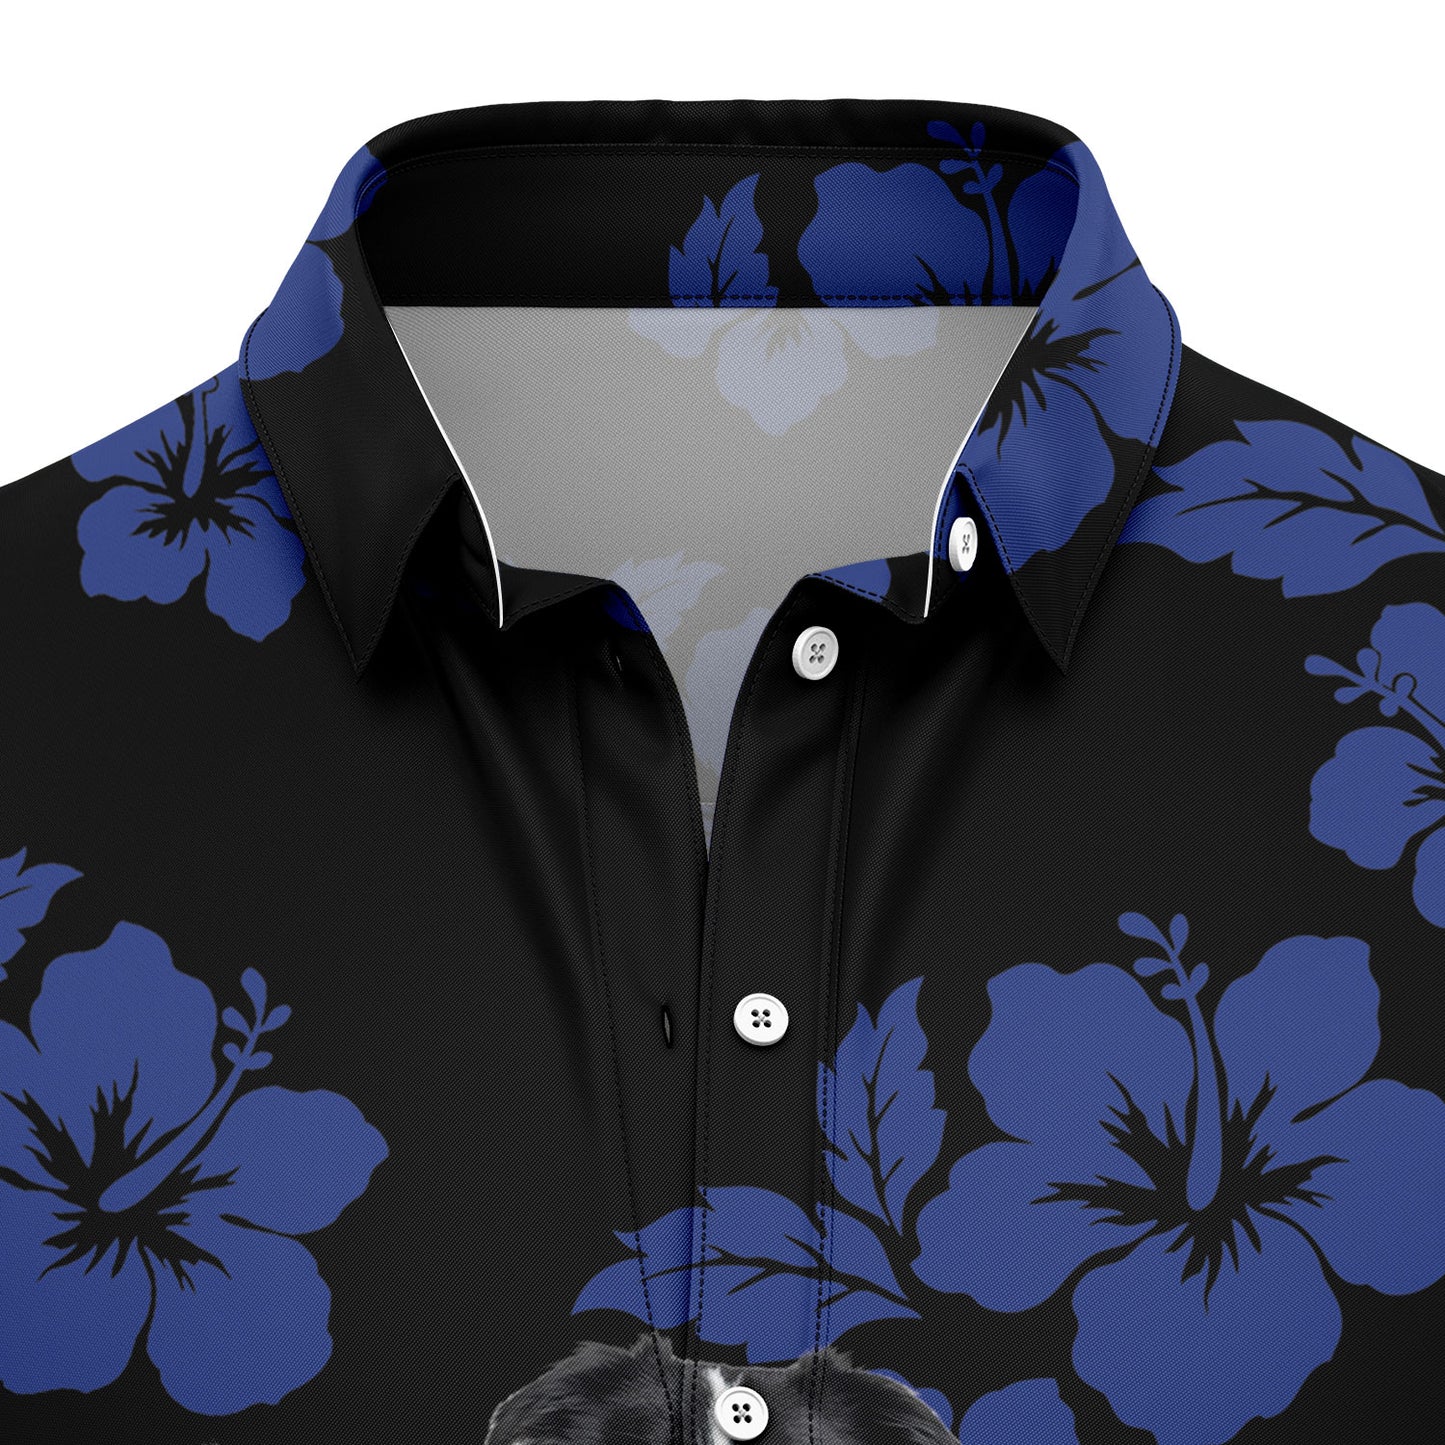 Awesome Border Collie TG5721 Hawaiian Shirt